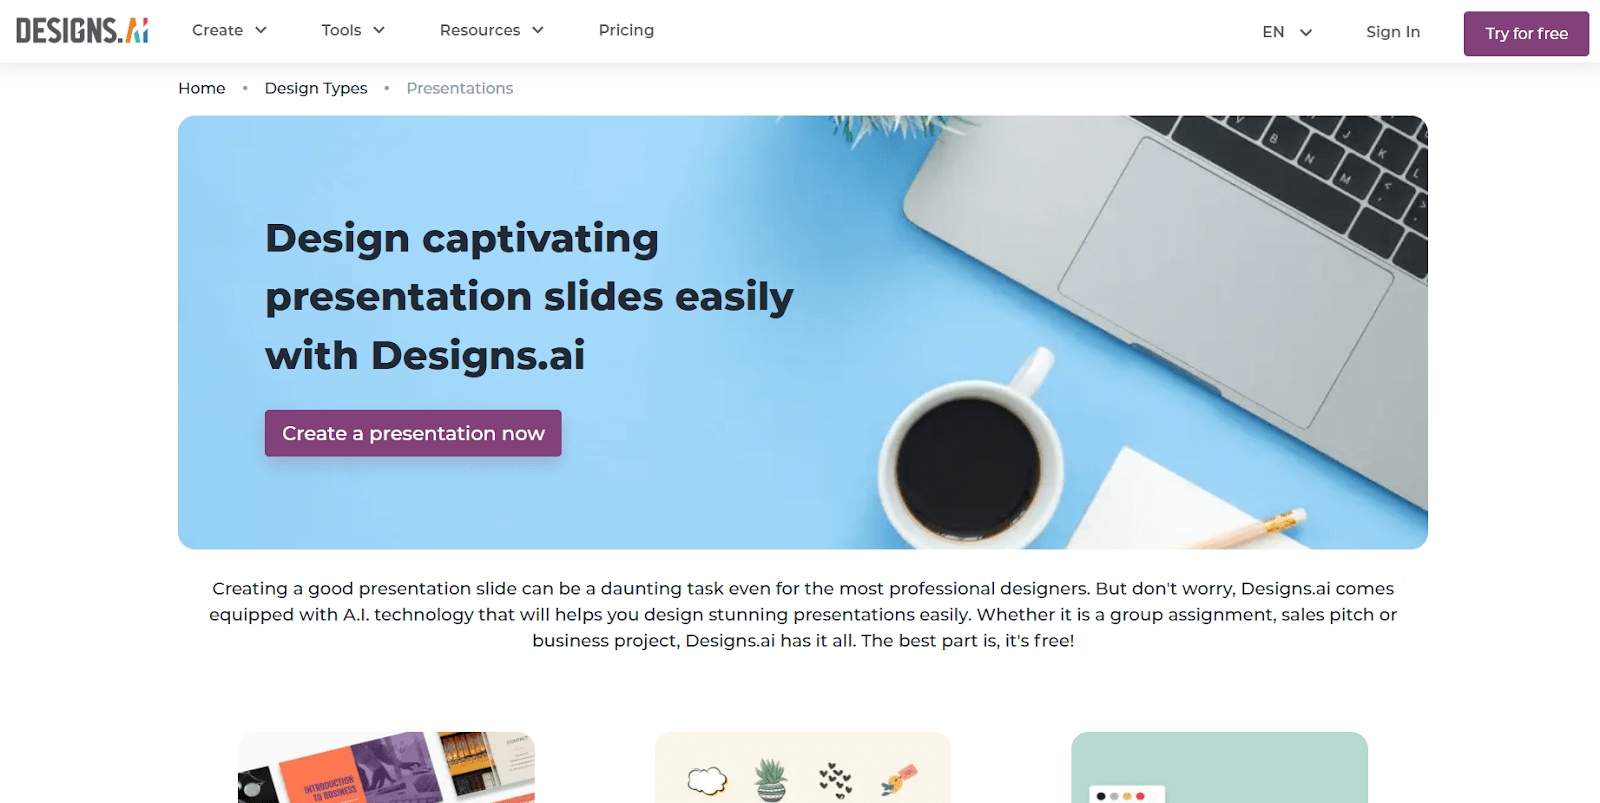 designs.ai website - design captivating presentation slides easily